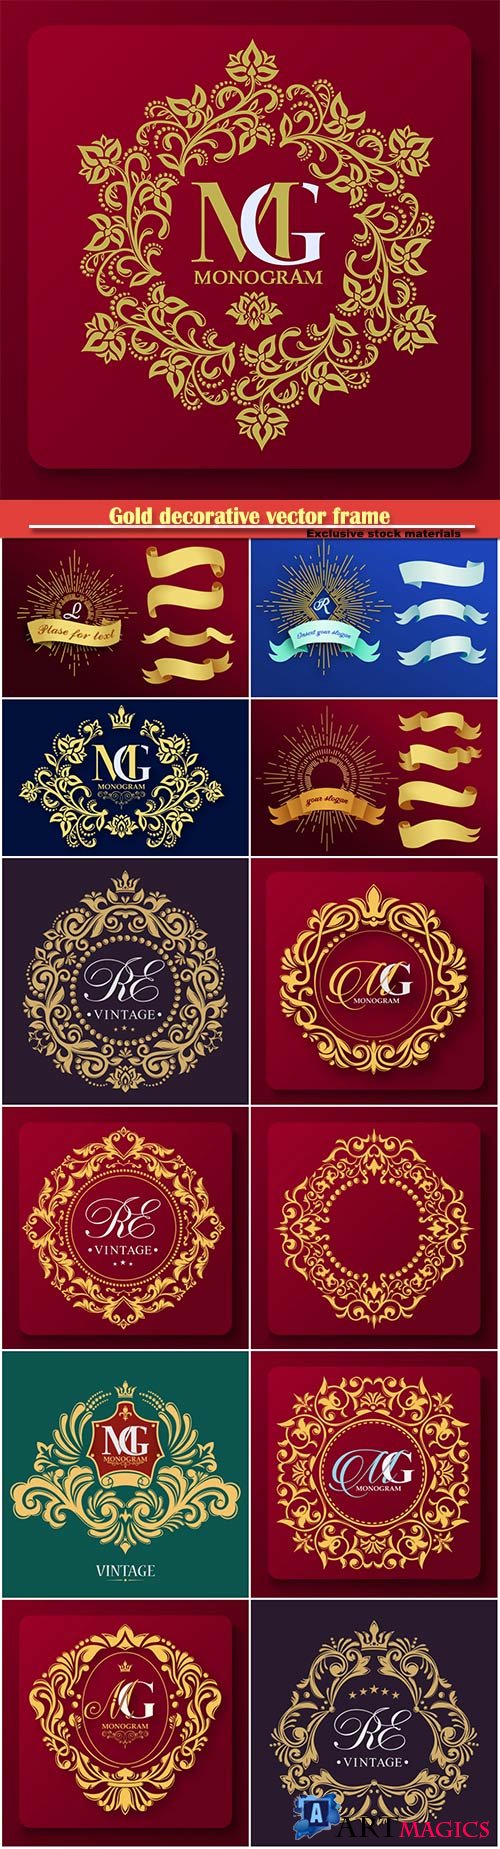 Gold decorative vector frame, logo templates and monogram, elegant emblem